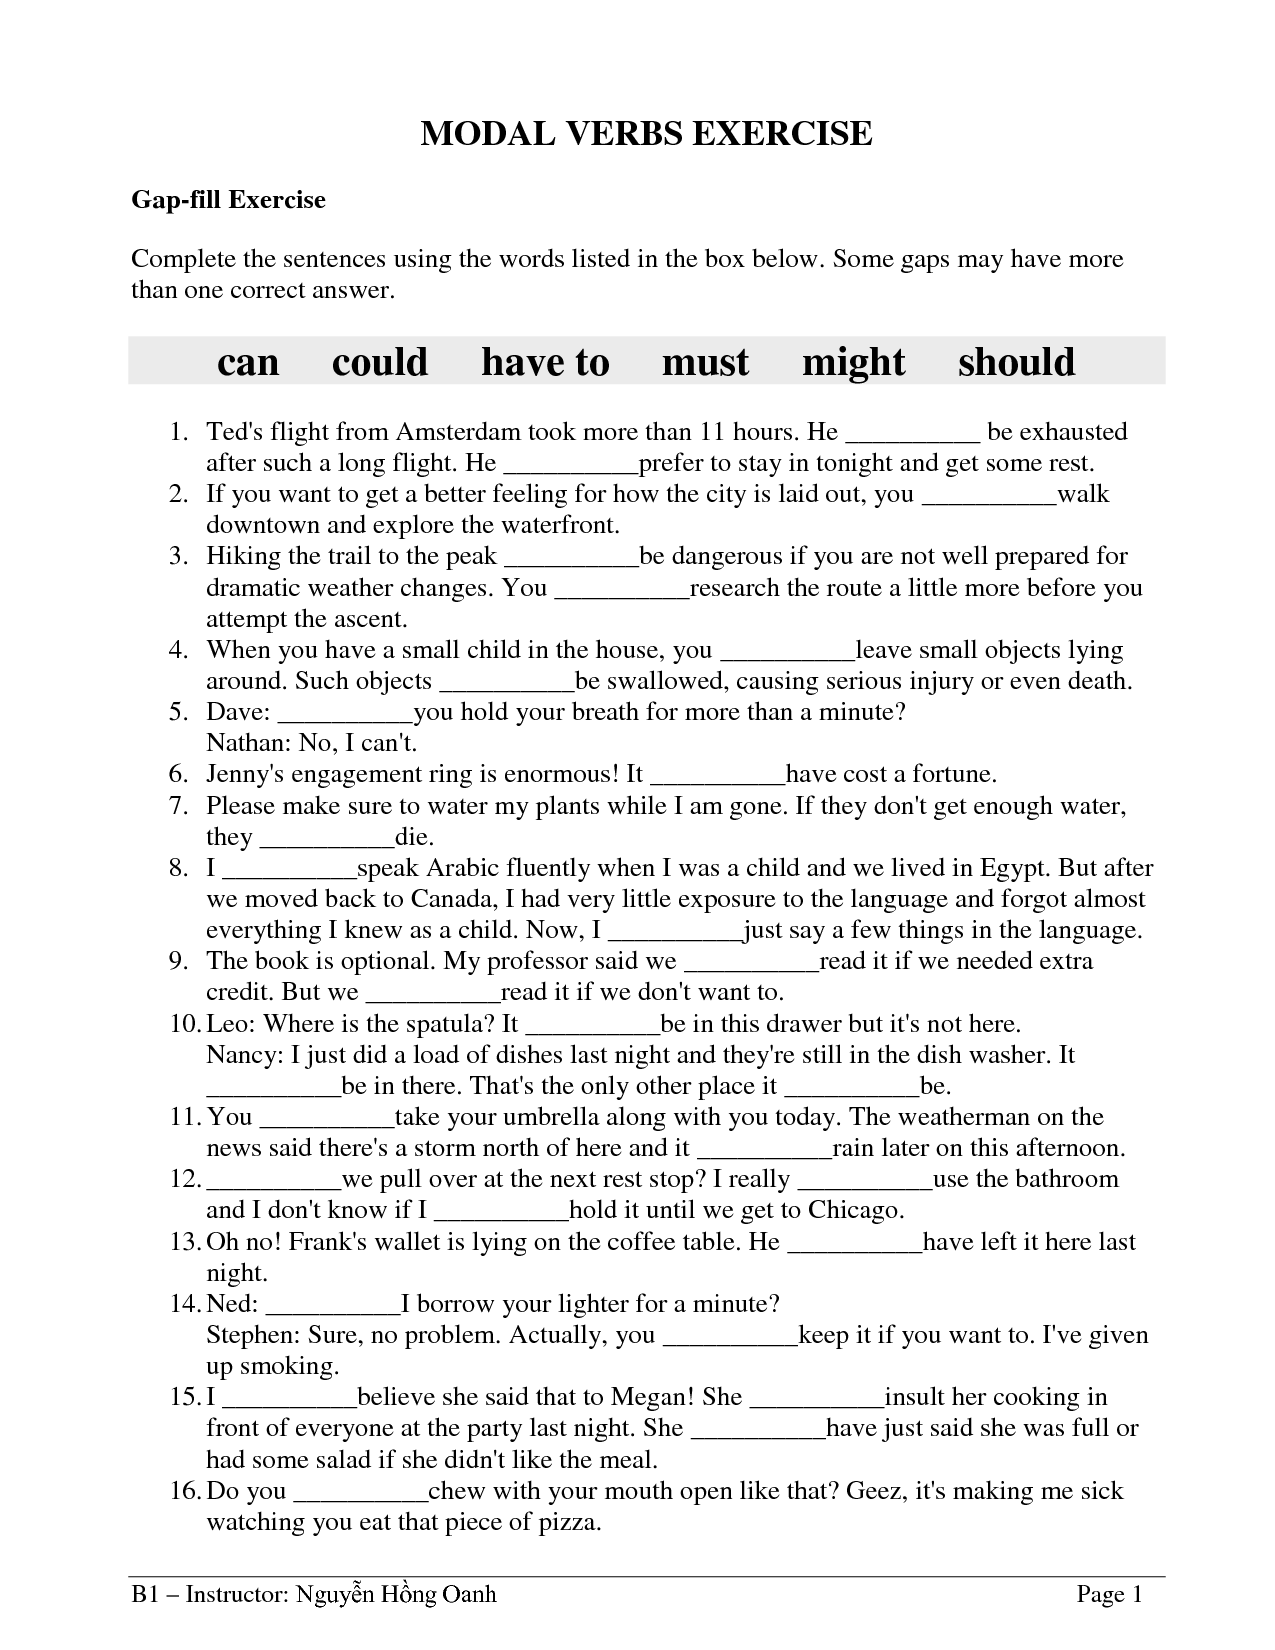 reported speech modals exercises pdf